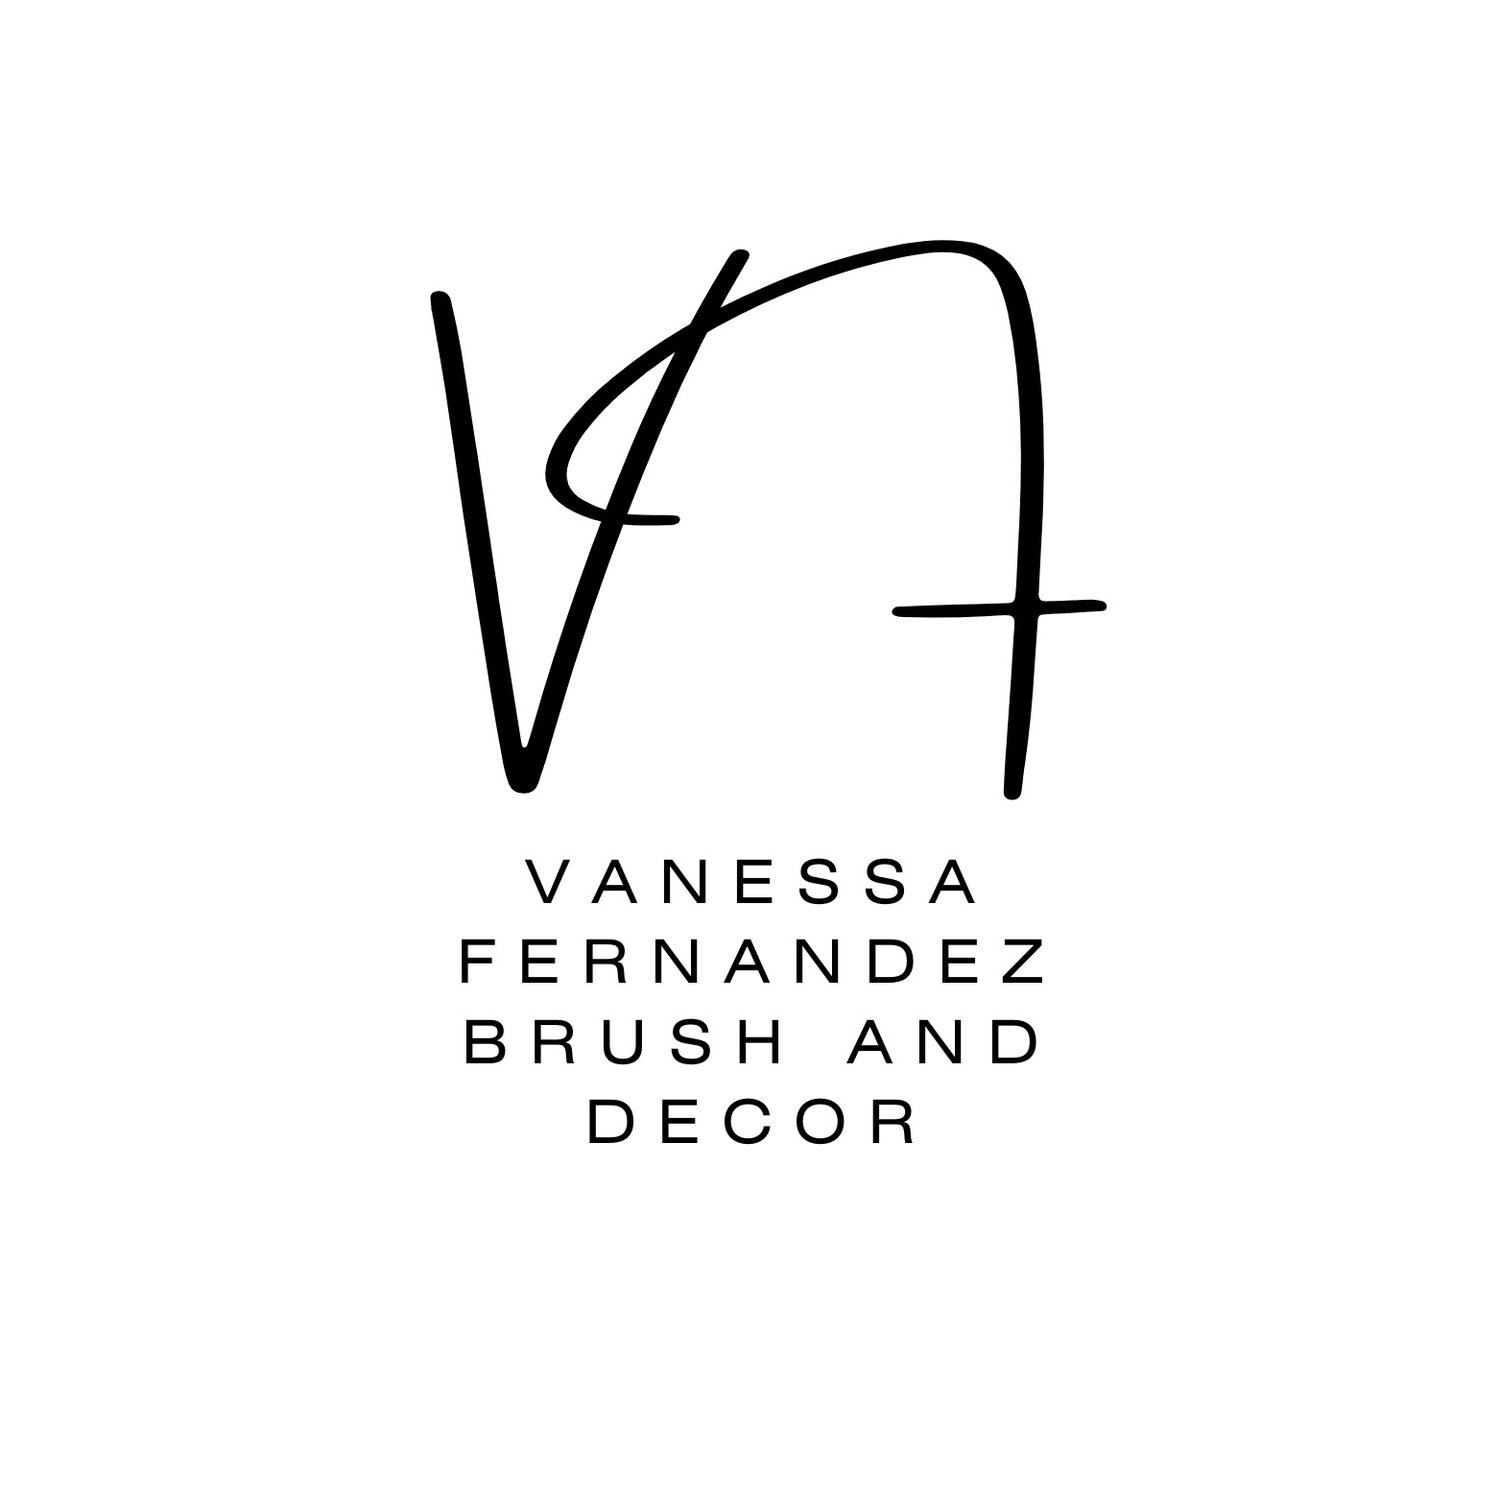     VANESSA FERNANDEZ       BRUSH AND DECOR                         